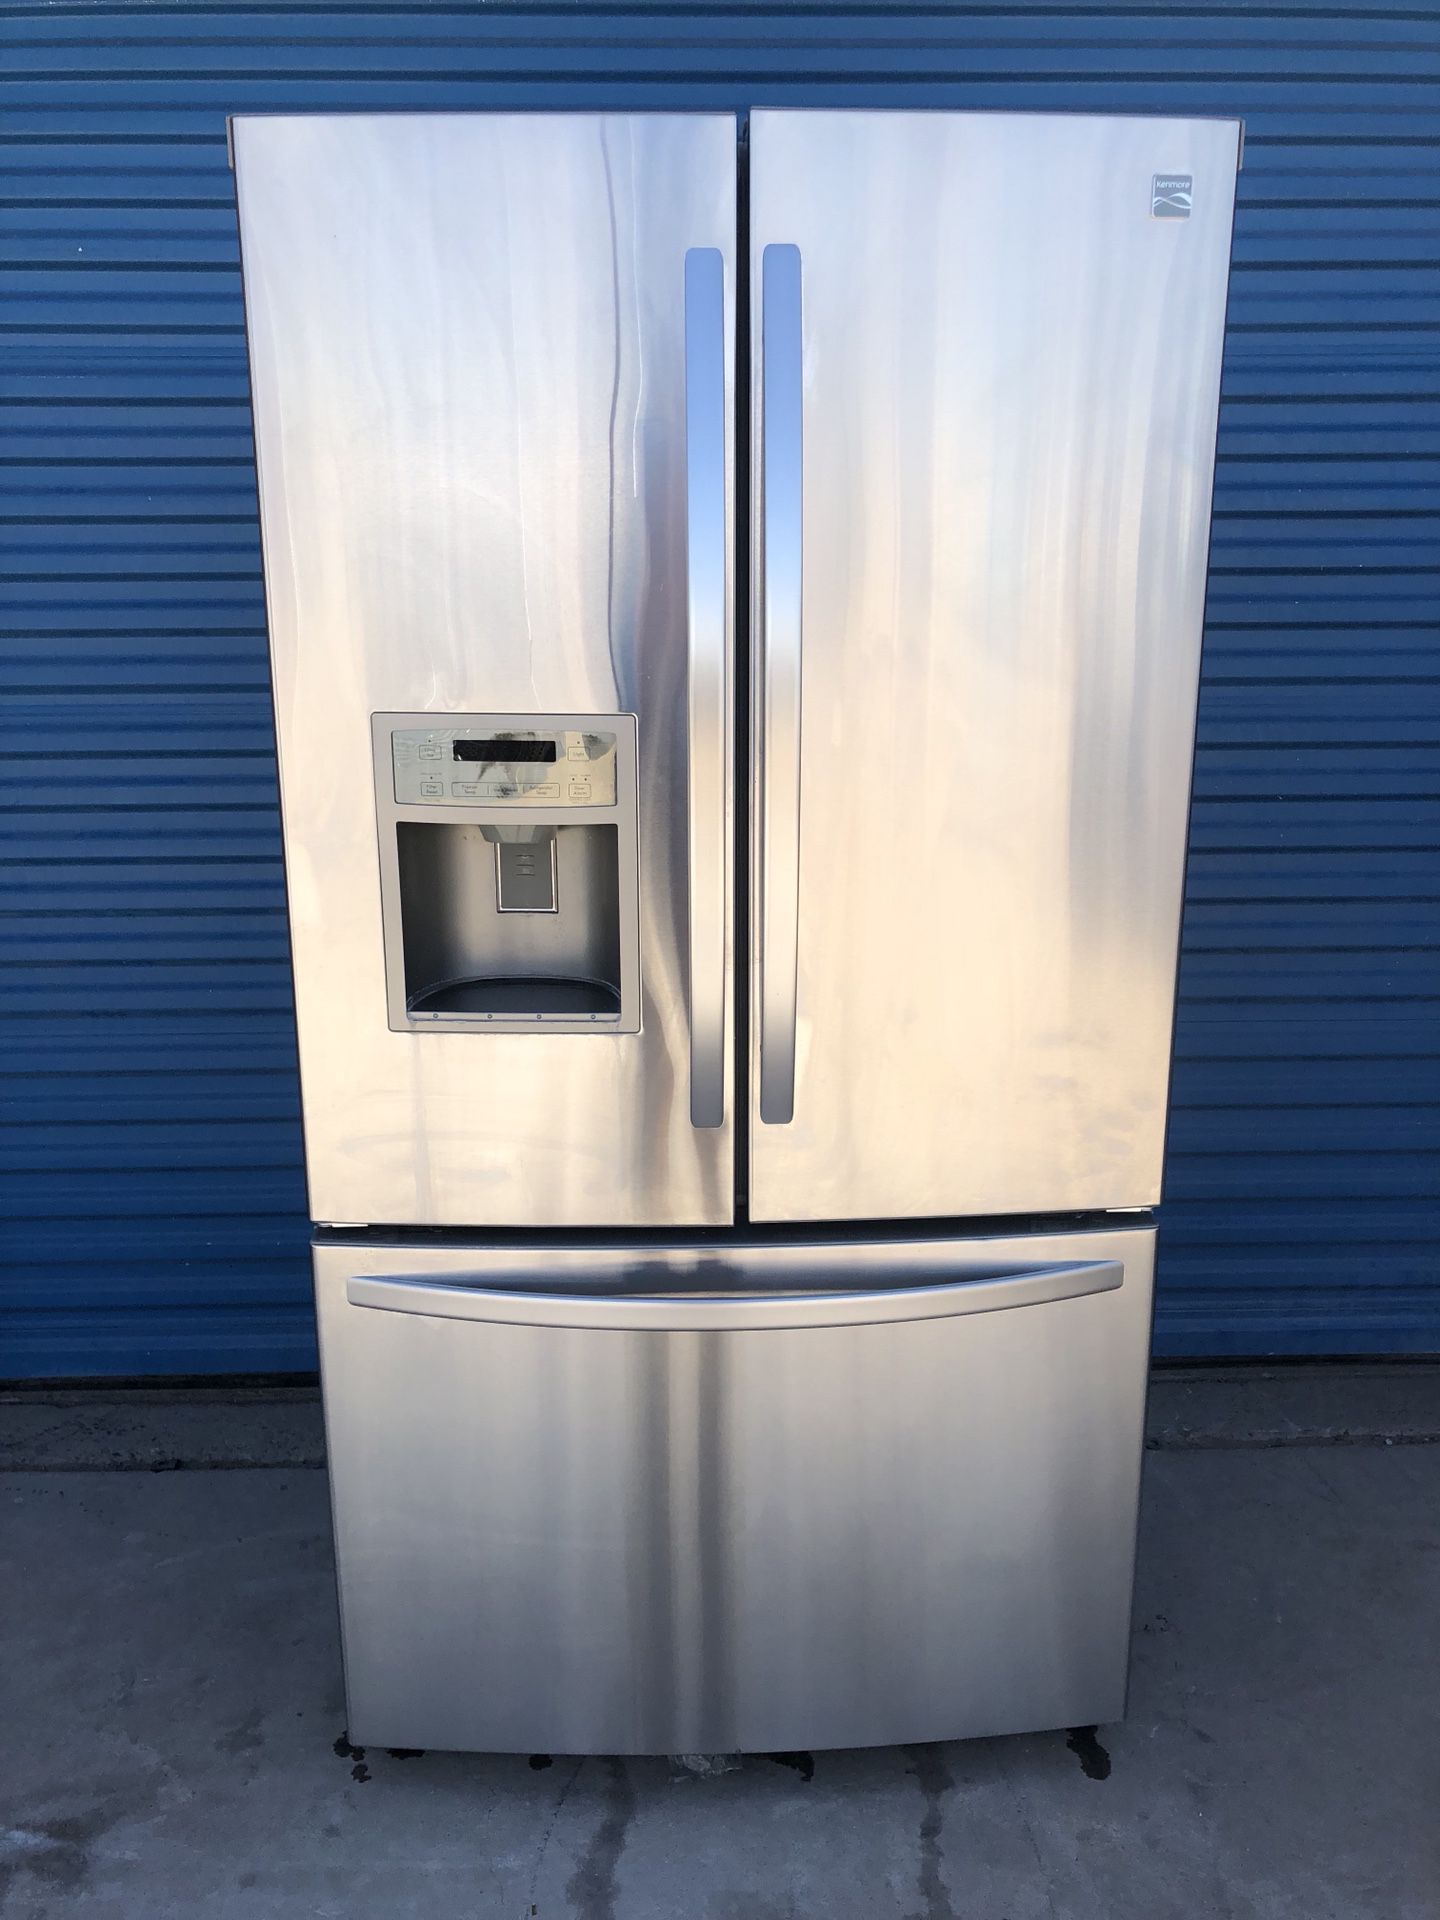 Kenmore French Door Stainless Steel Refrigerator (30 DAY WARRANTY)